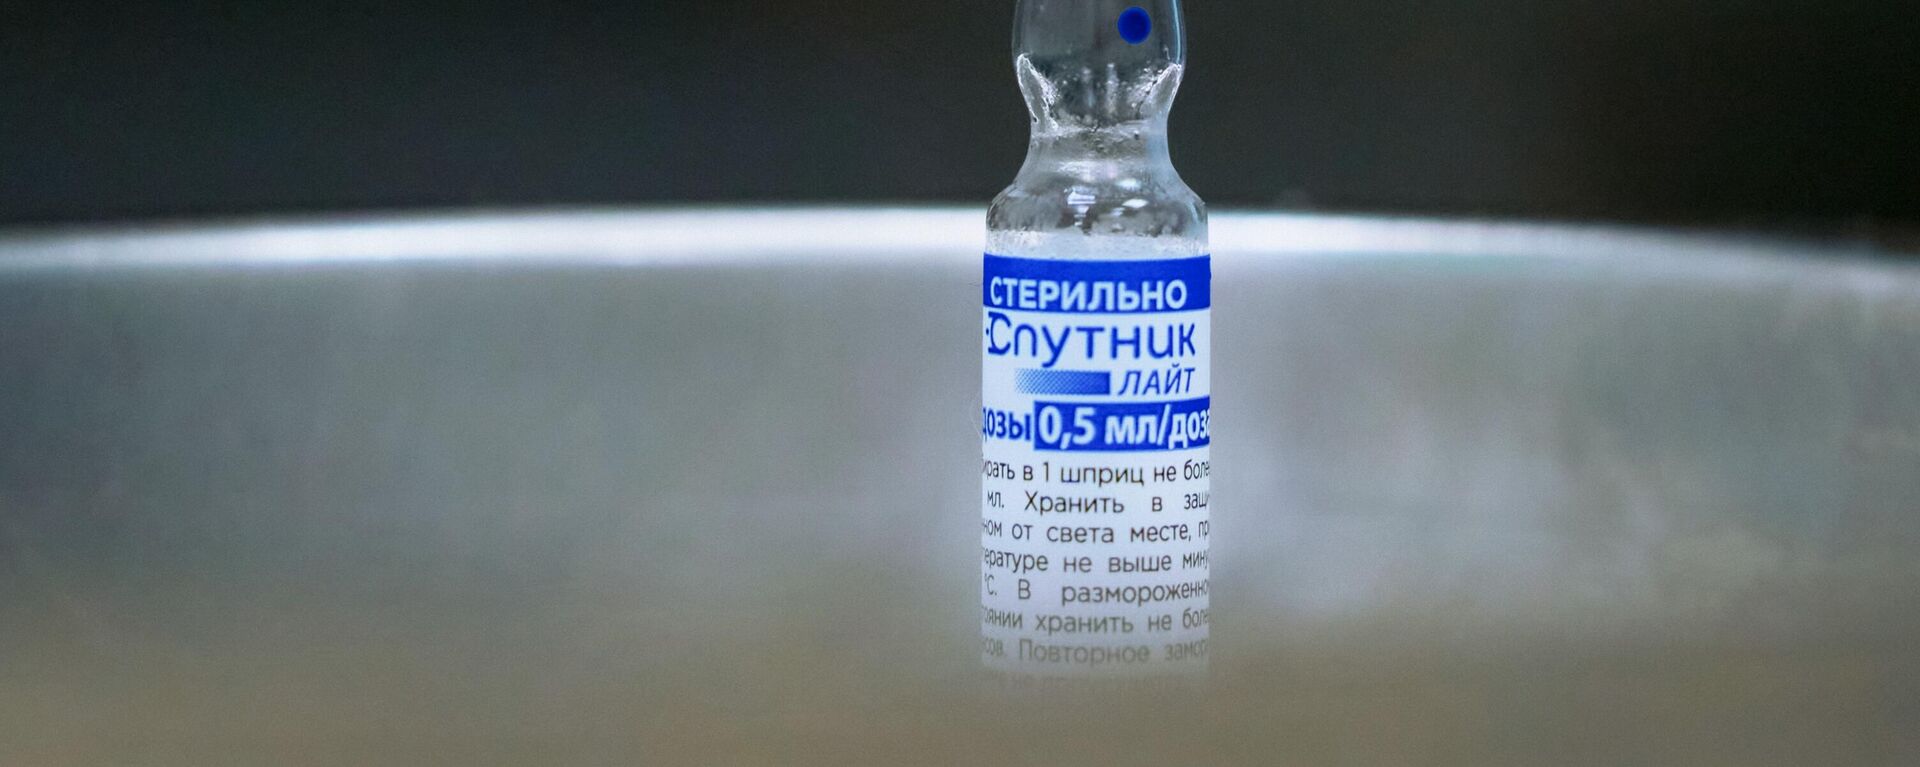 Vacuna monodosis rusa Sputnik Light - Sputnik Mundo, 1920, 28.10.2021